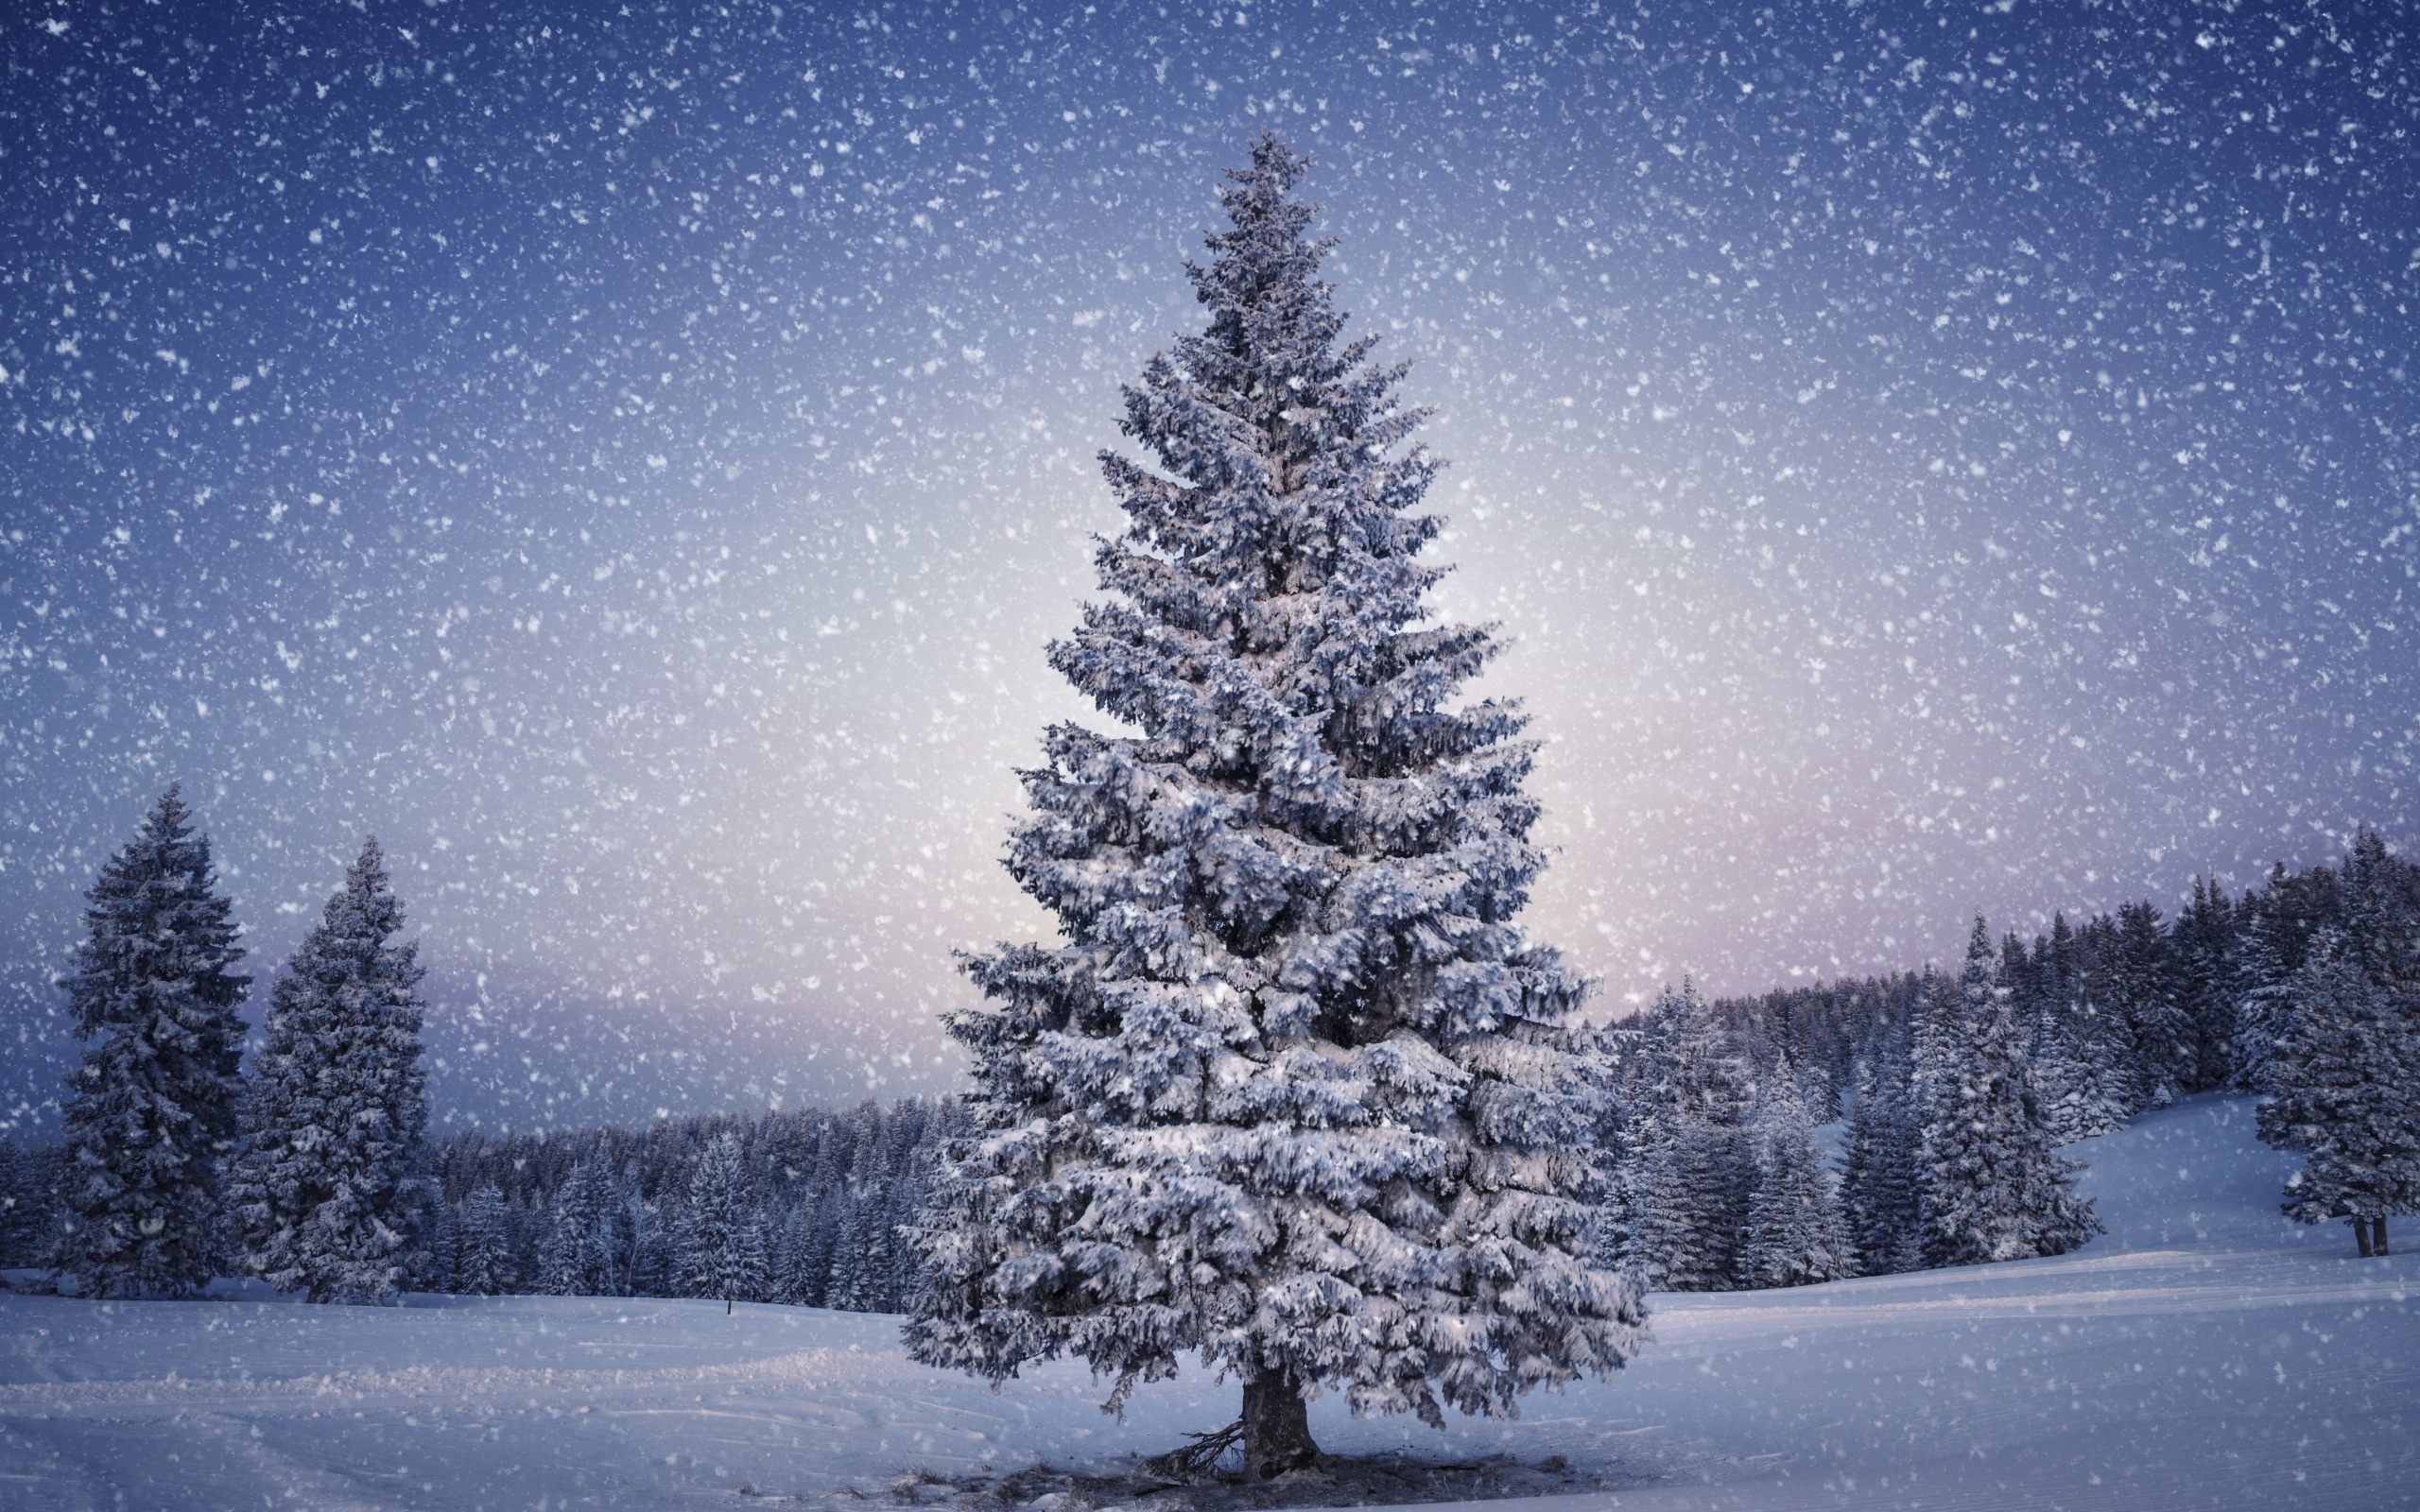 Snowy Christmas Tree Wallpaper And Stock Photos